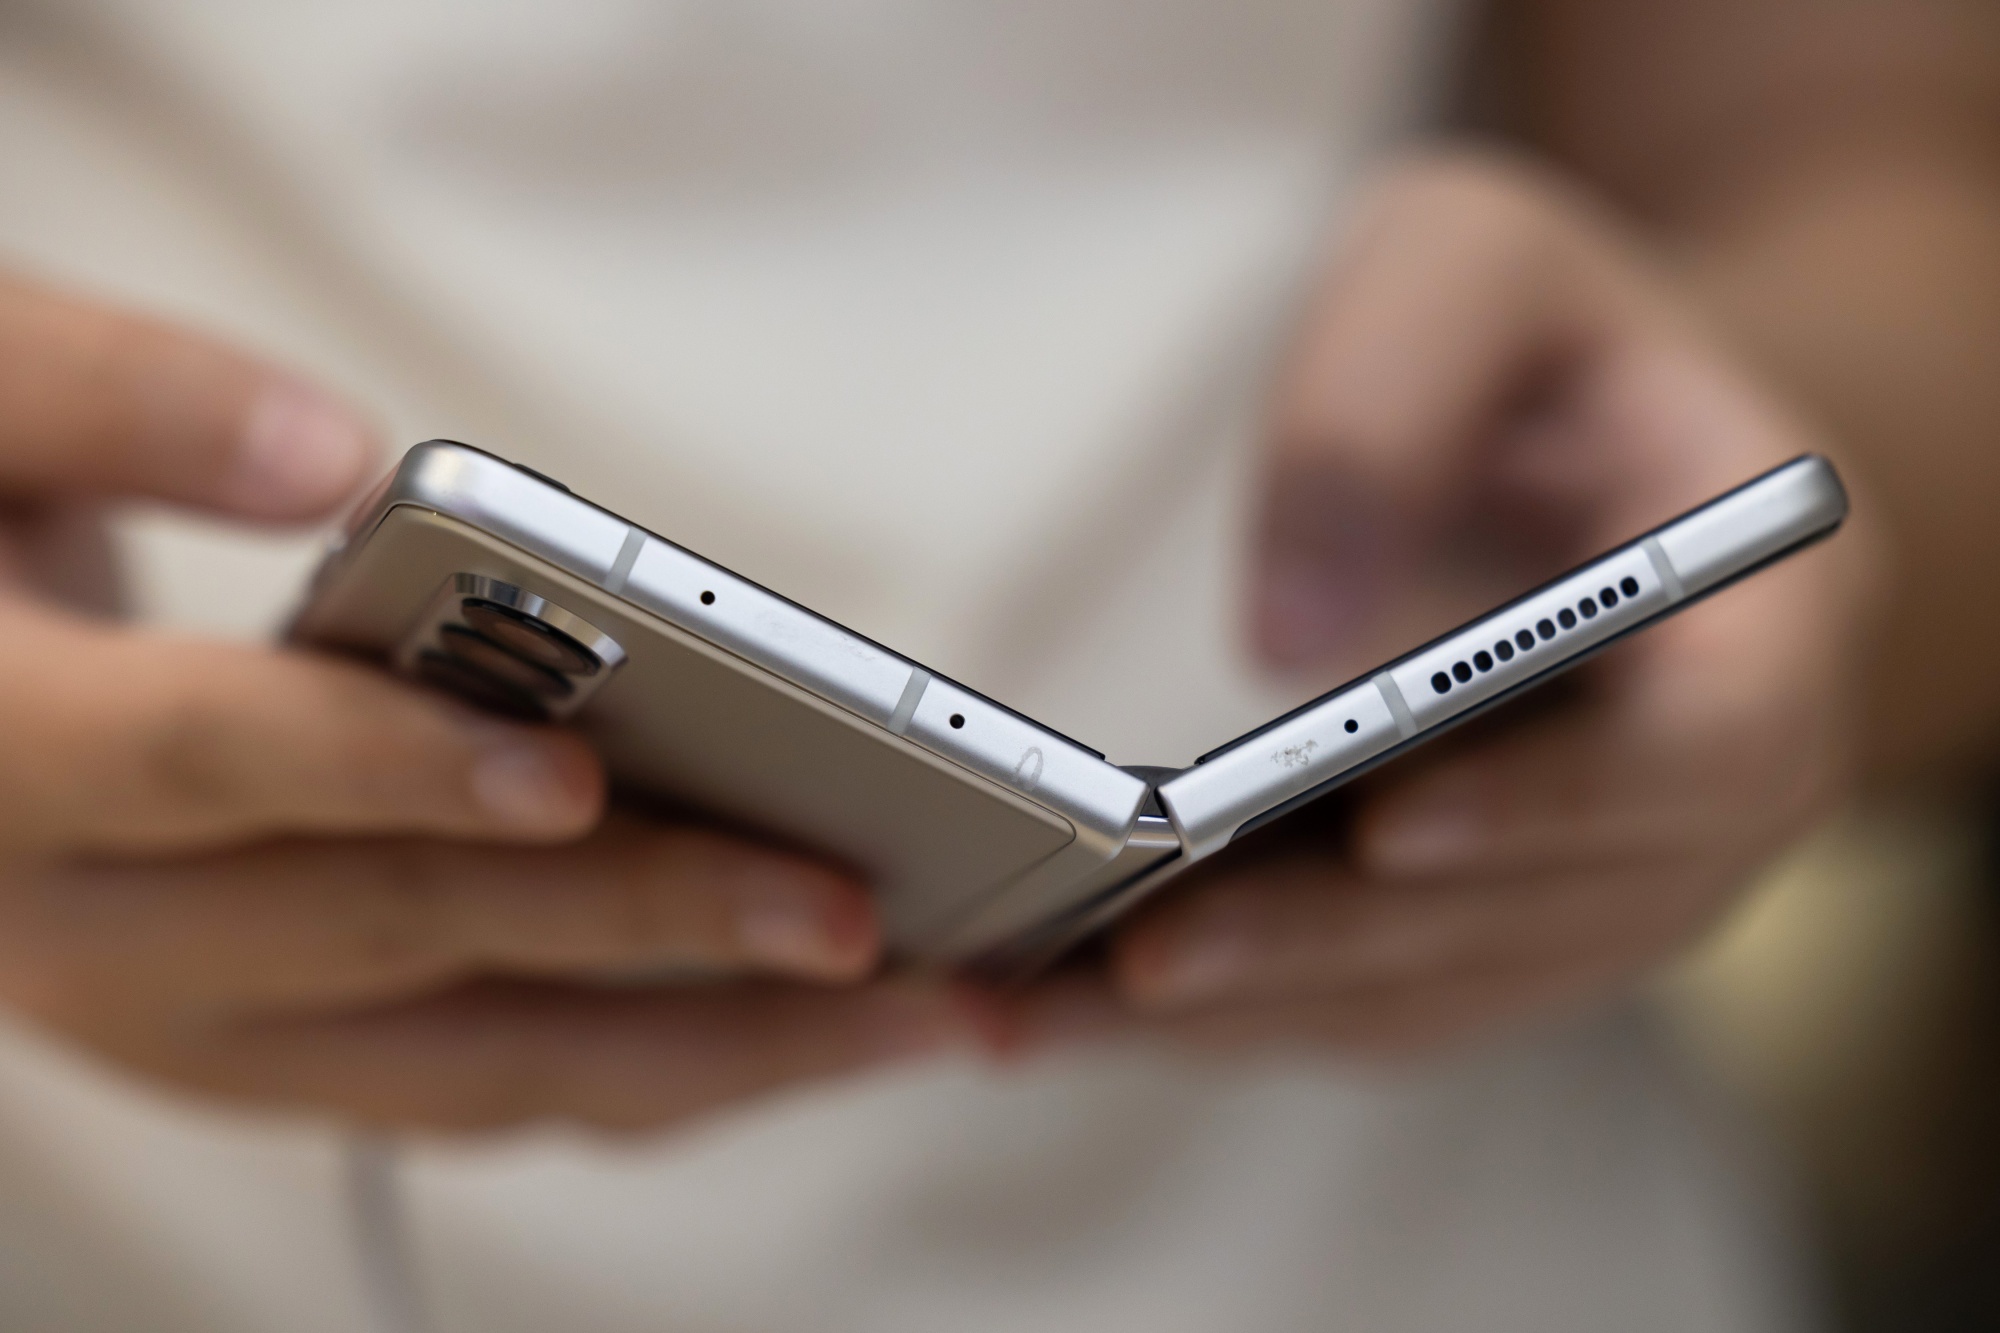 Samsung Galaxy Fold, Galaxy Note 10 Lite get April 2022 security update -  SamMobile